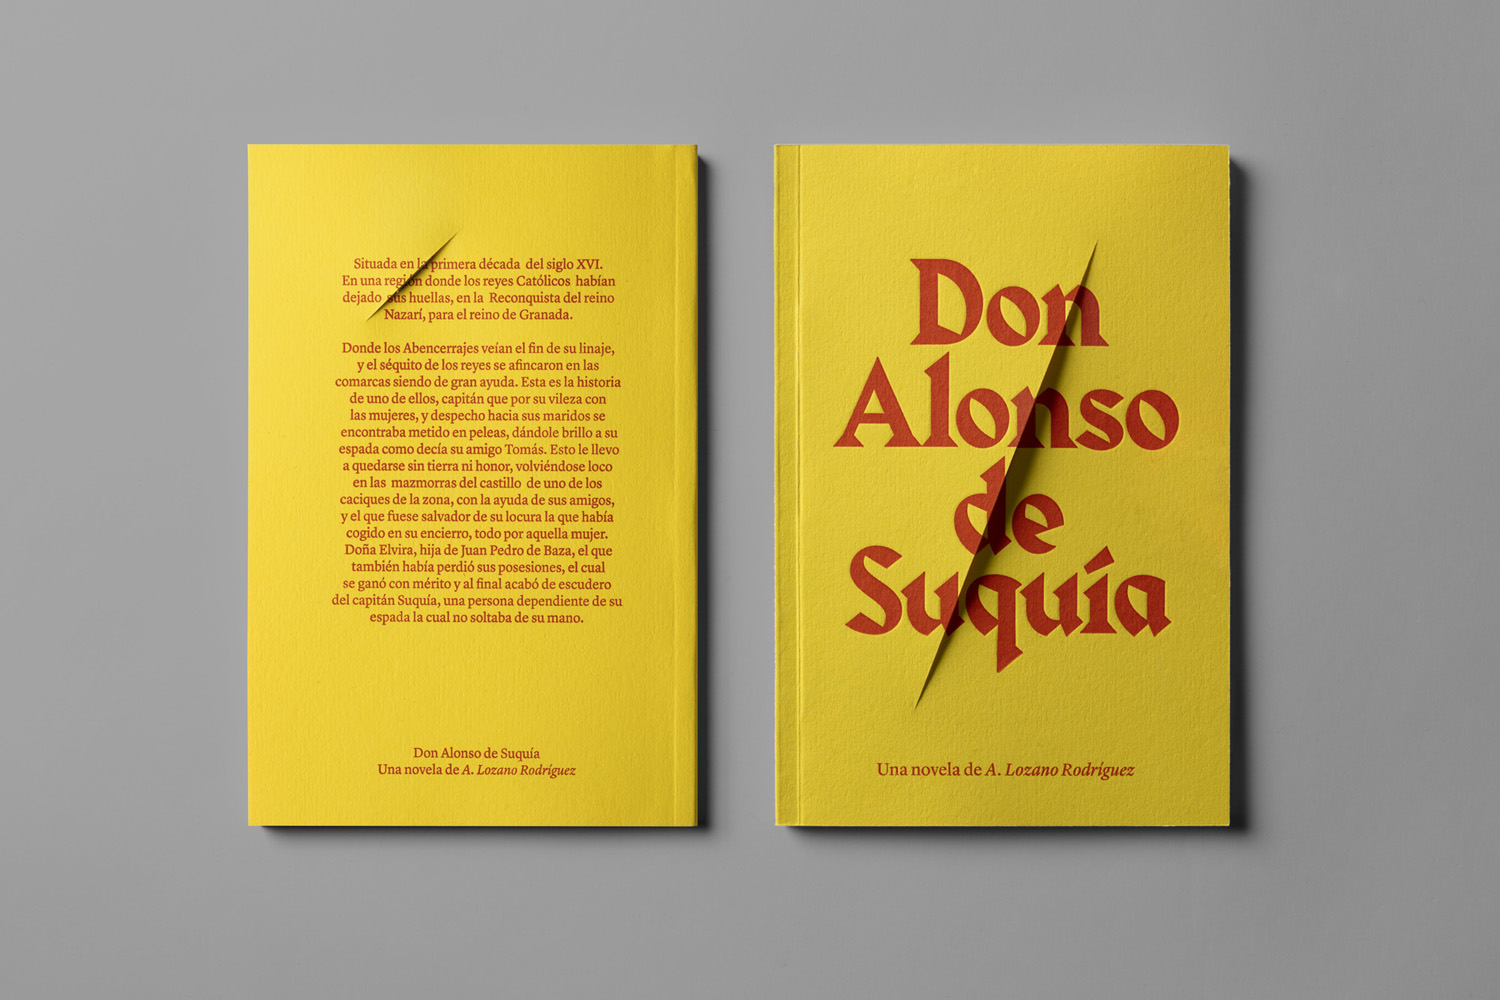 Cover design by designers Carlos Bermudez, Albert Porta and Guillem Casasus for the book Don Alonso de Suquía, written by A. Lozano Rodríguez